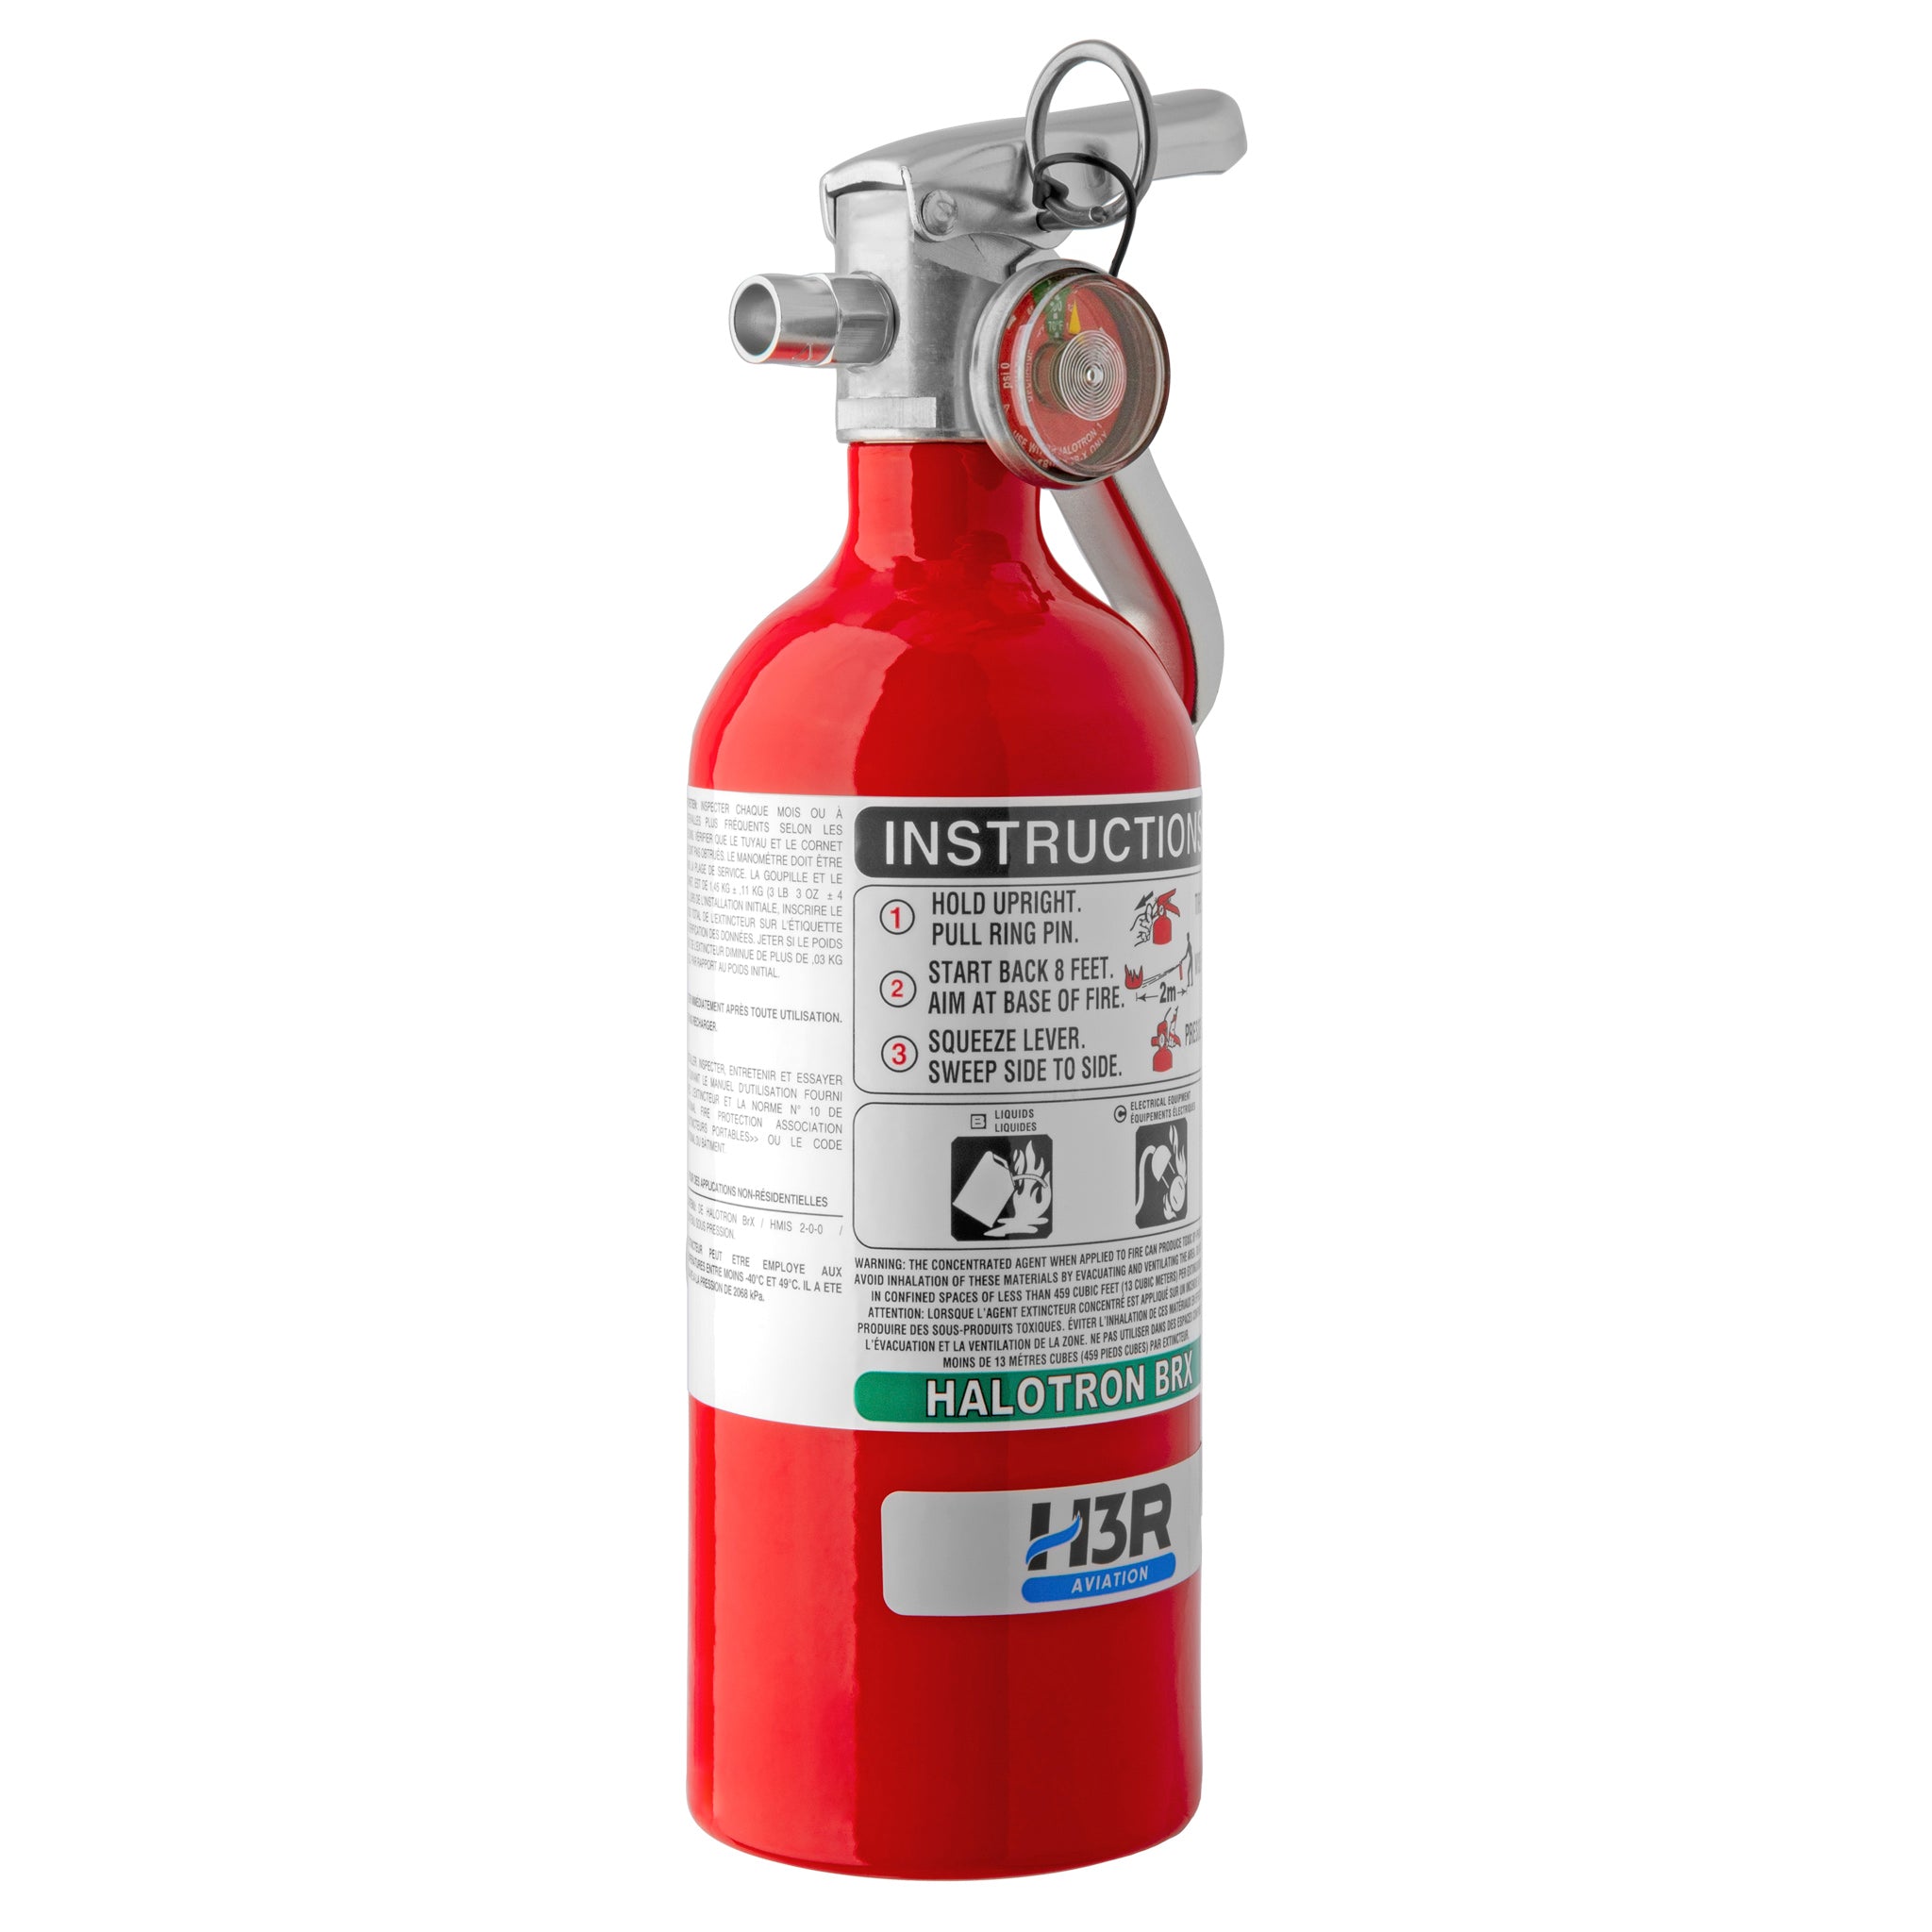 337TS - 1.92 lb. Halotron BrX Fire Extinguisher